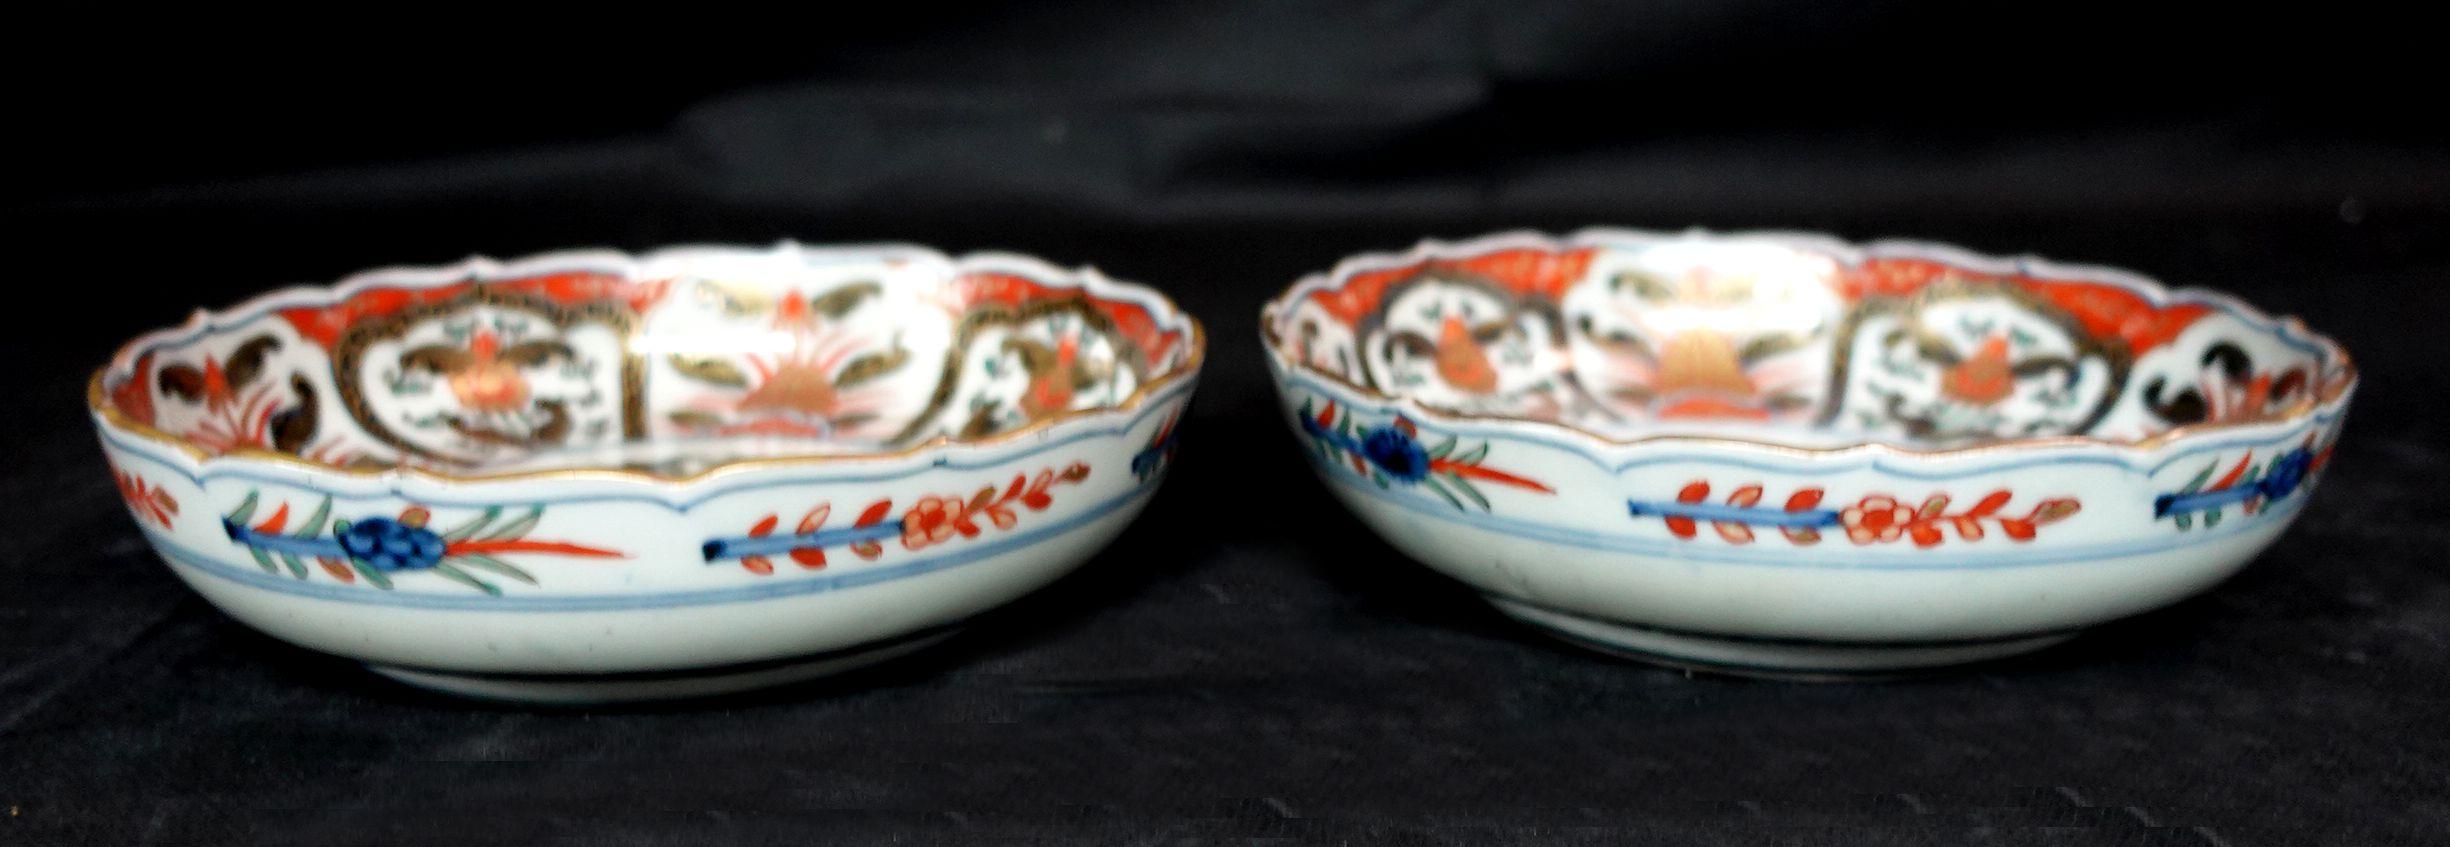 Pair of Japanese Imari Plates, 19th Century, RIc 055 For Sale 7